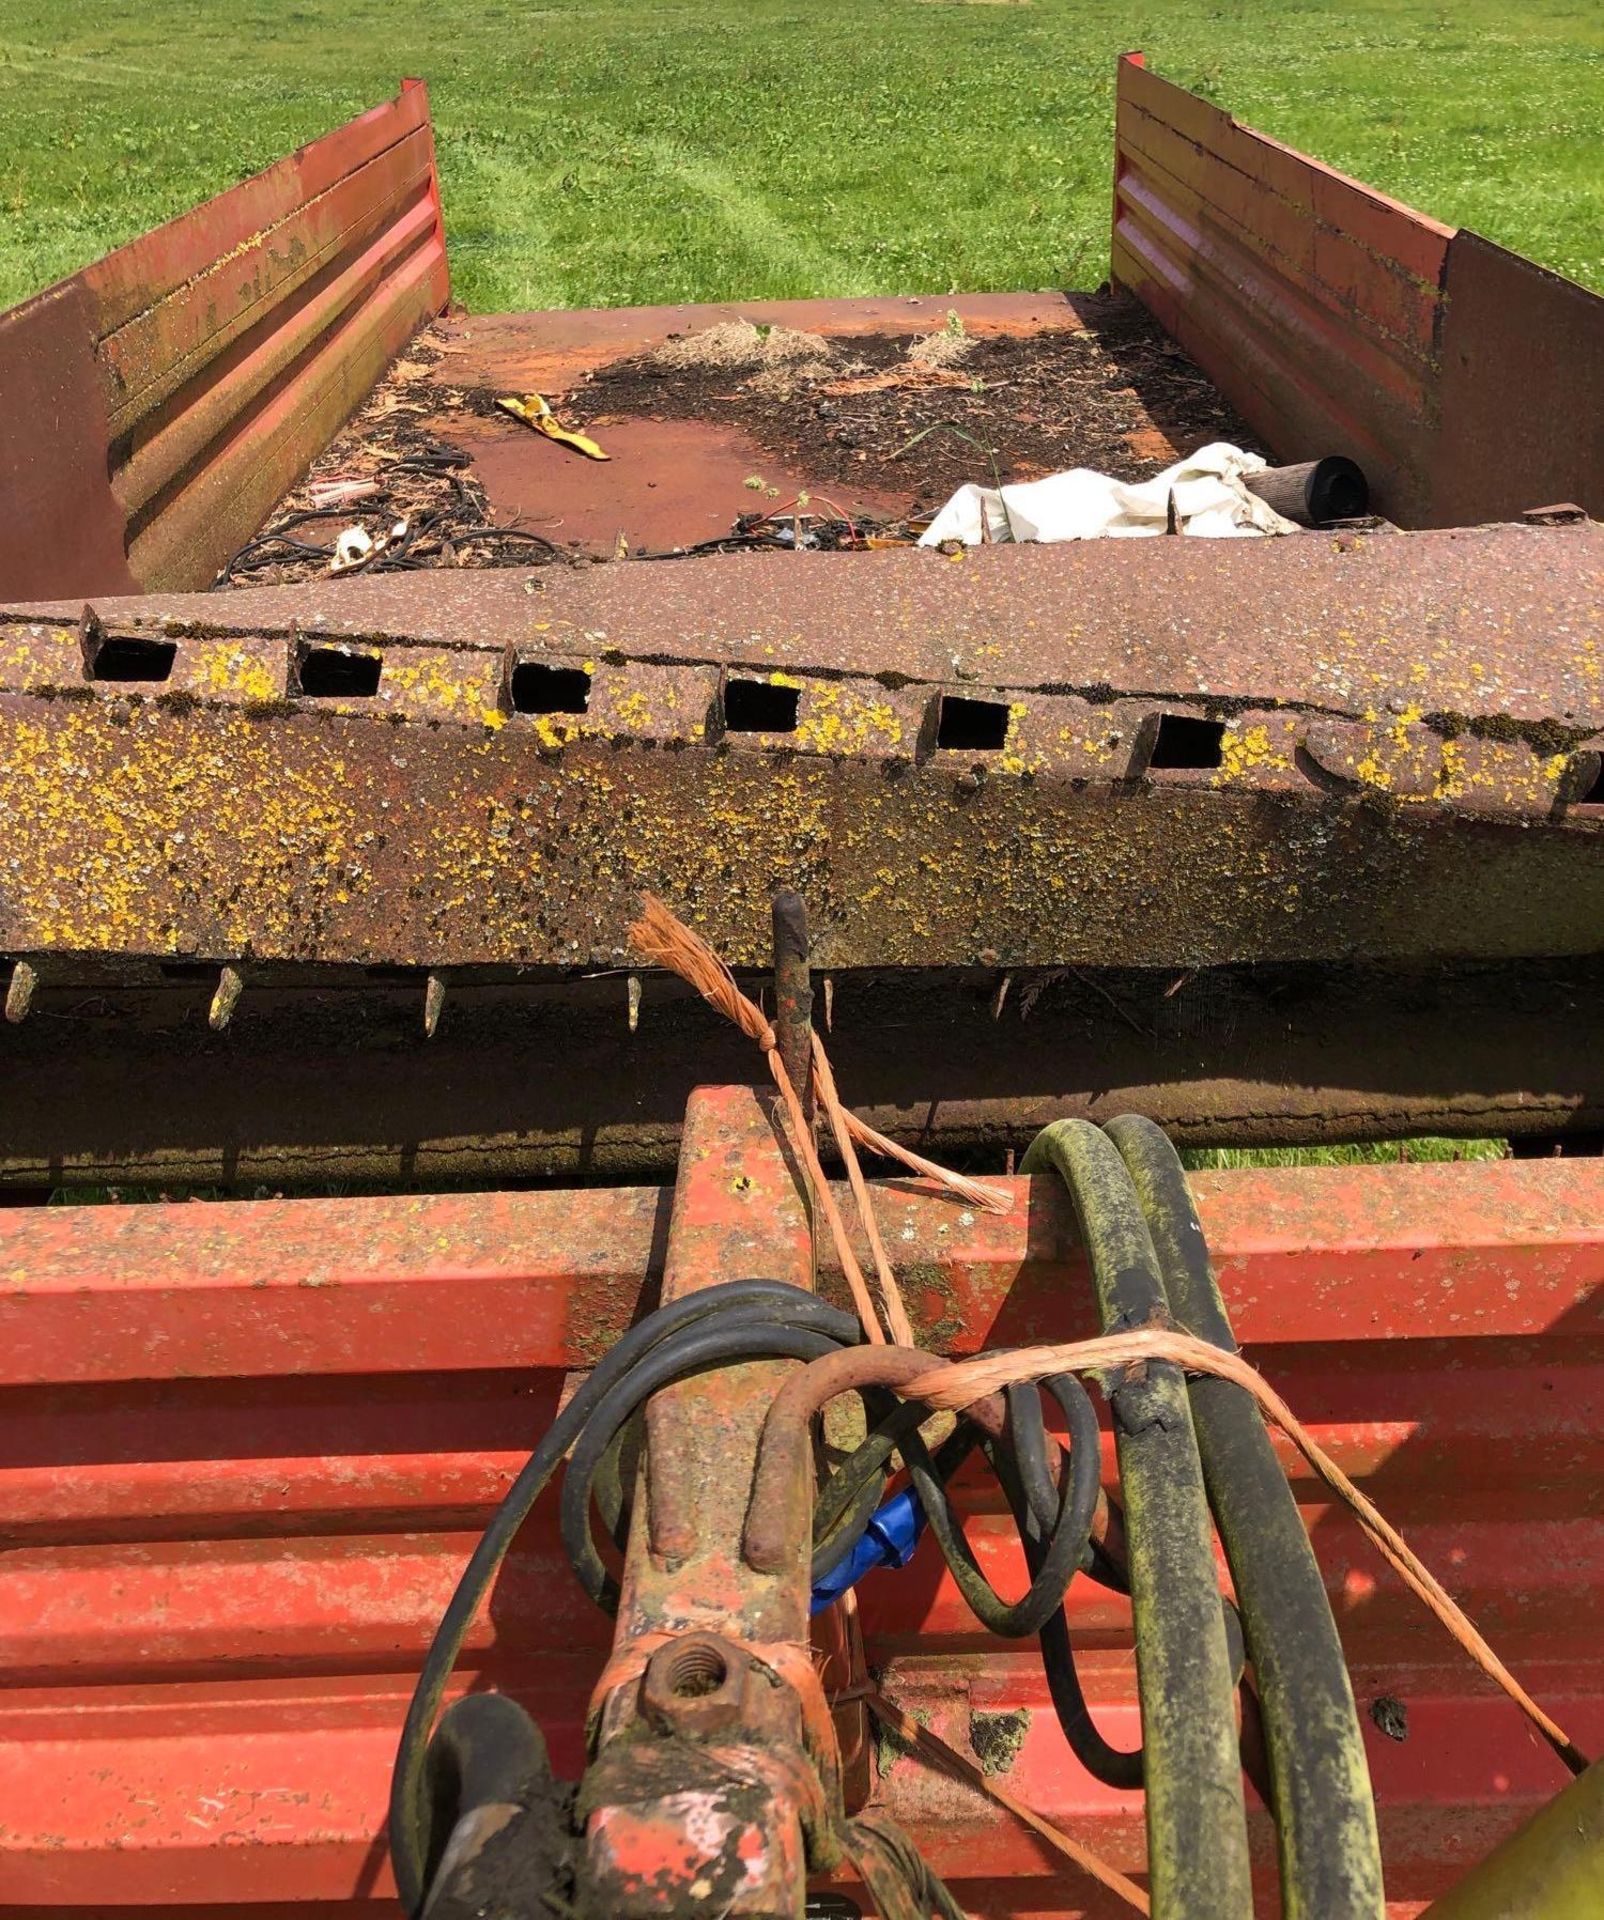 Old Schuitemaker Fyssen Feed Wagon (repair or spares) - Image 4 of 4